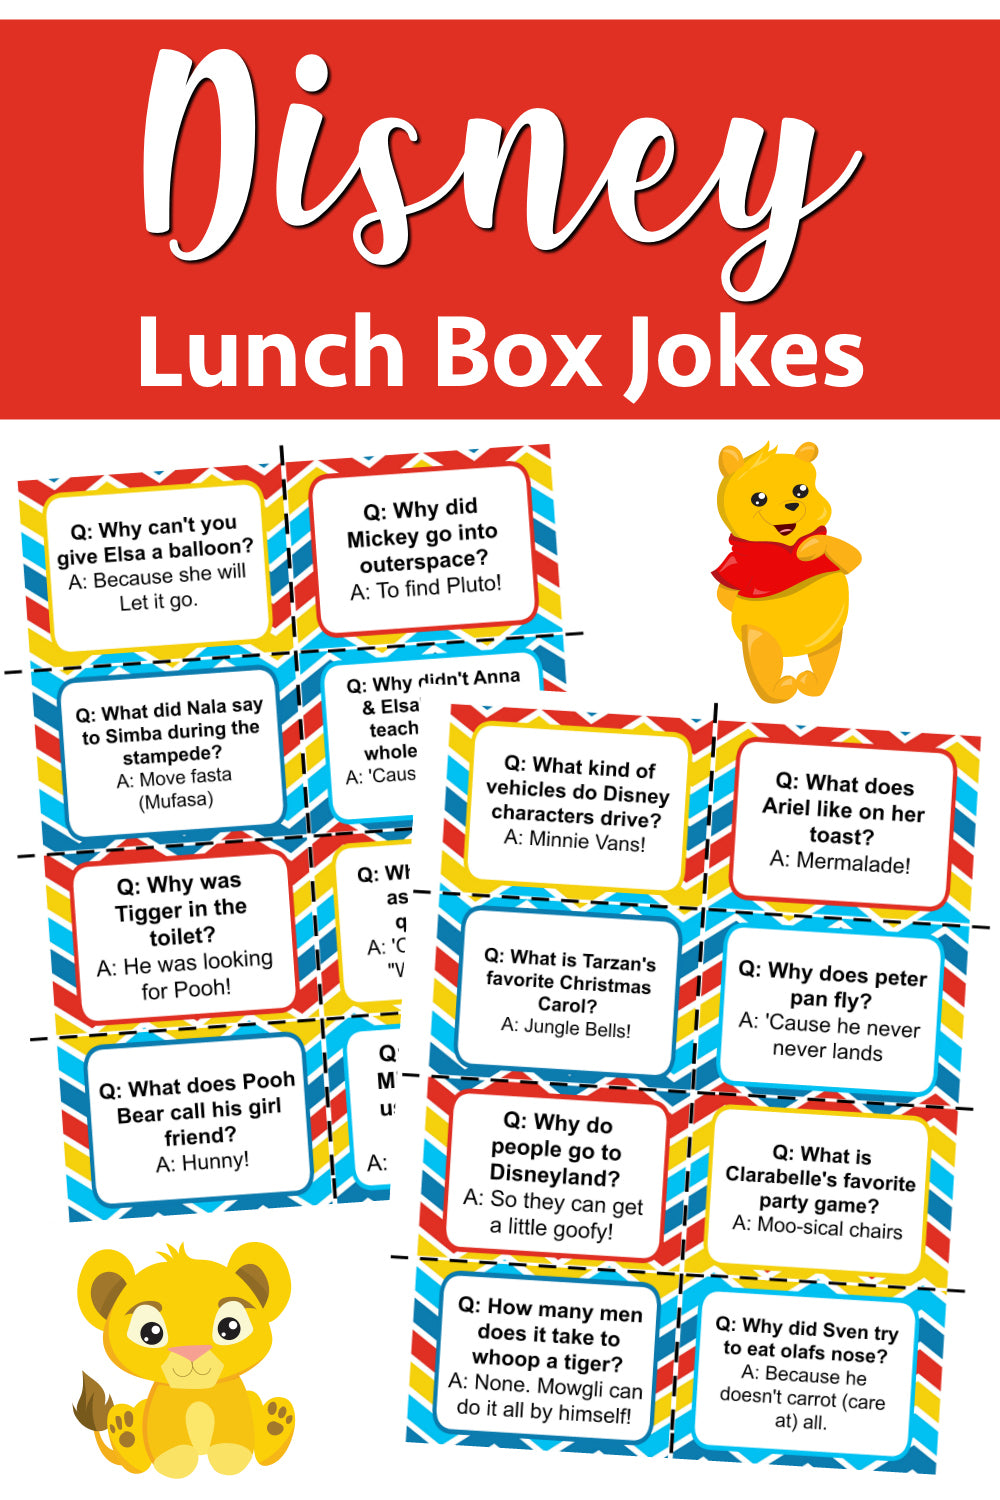 Disney-Themed Lunch Box Jokes!